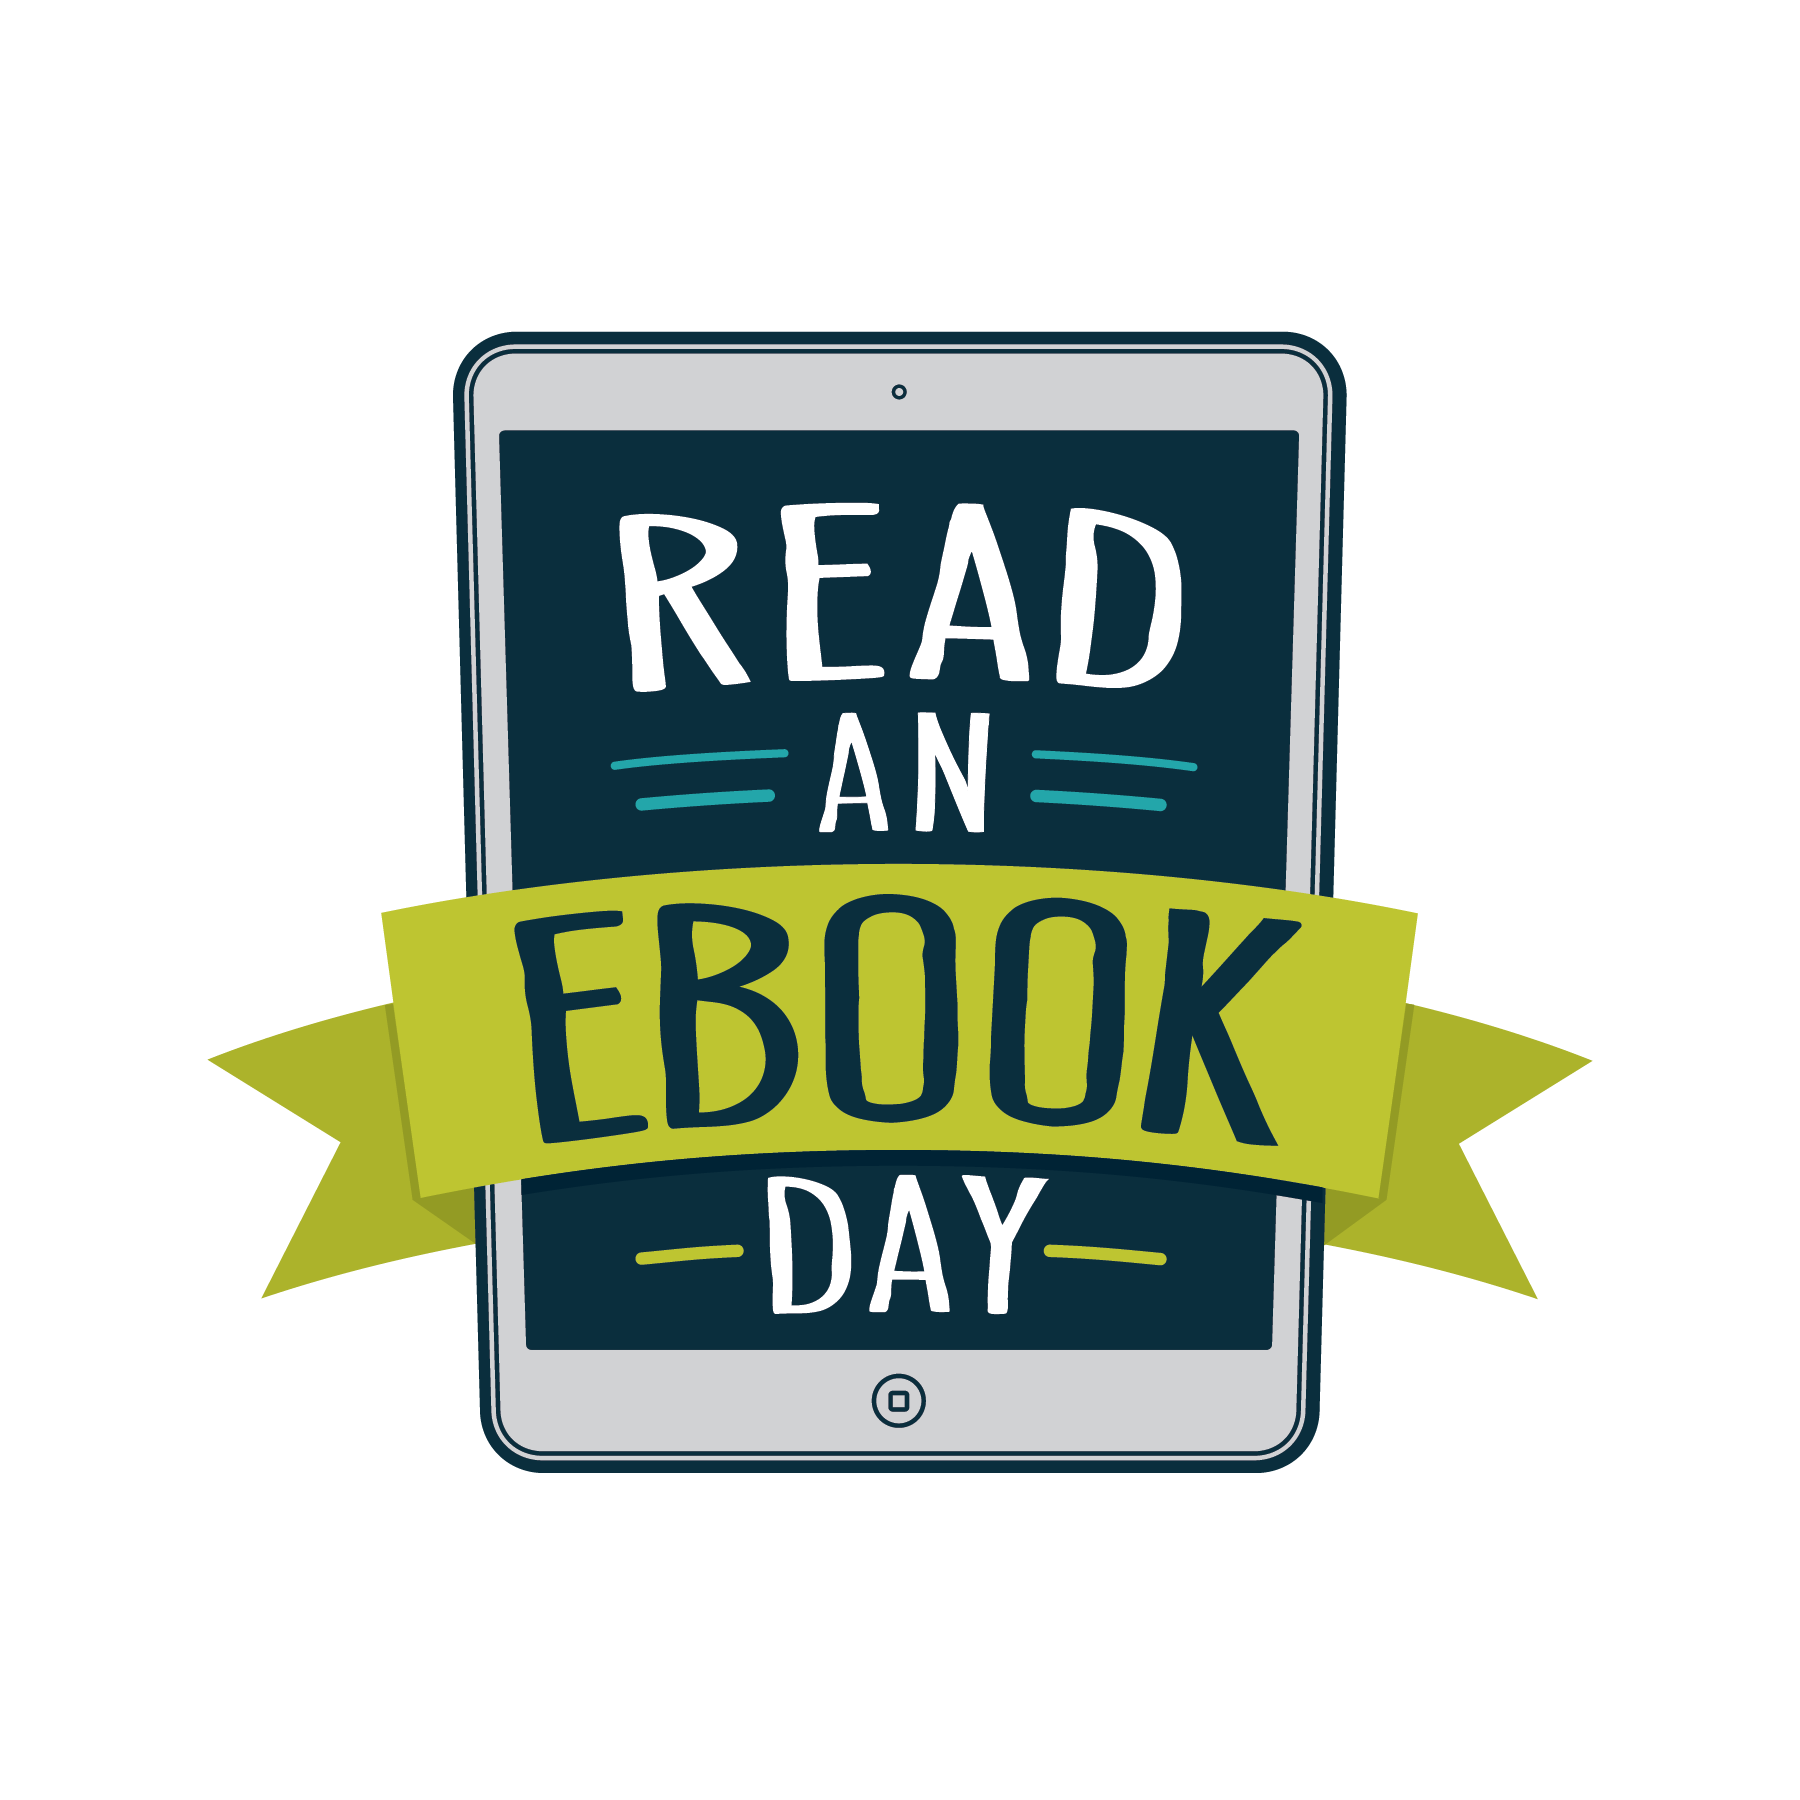 Happy Read an Ebook Day!